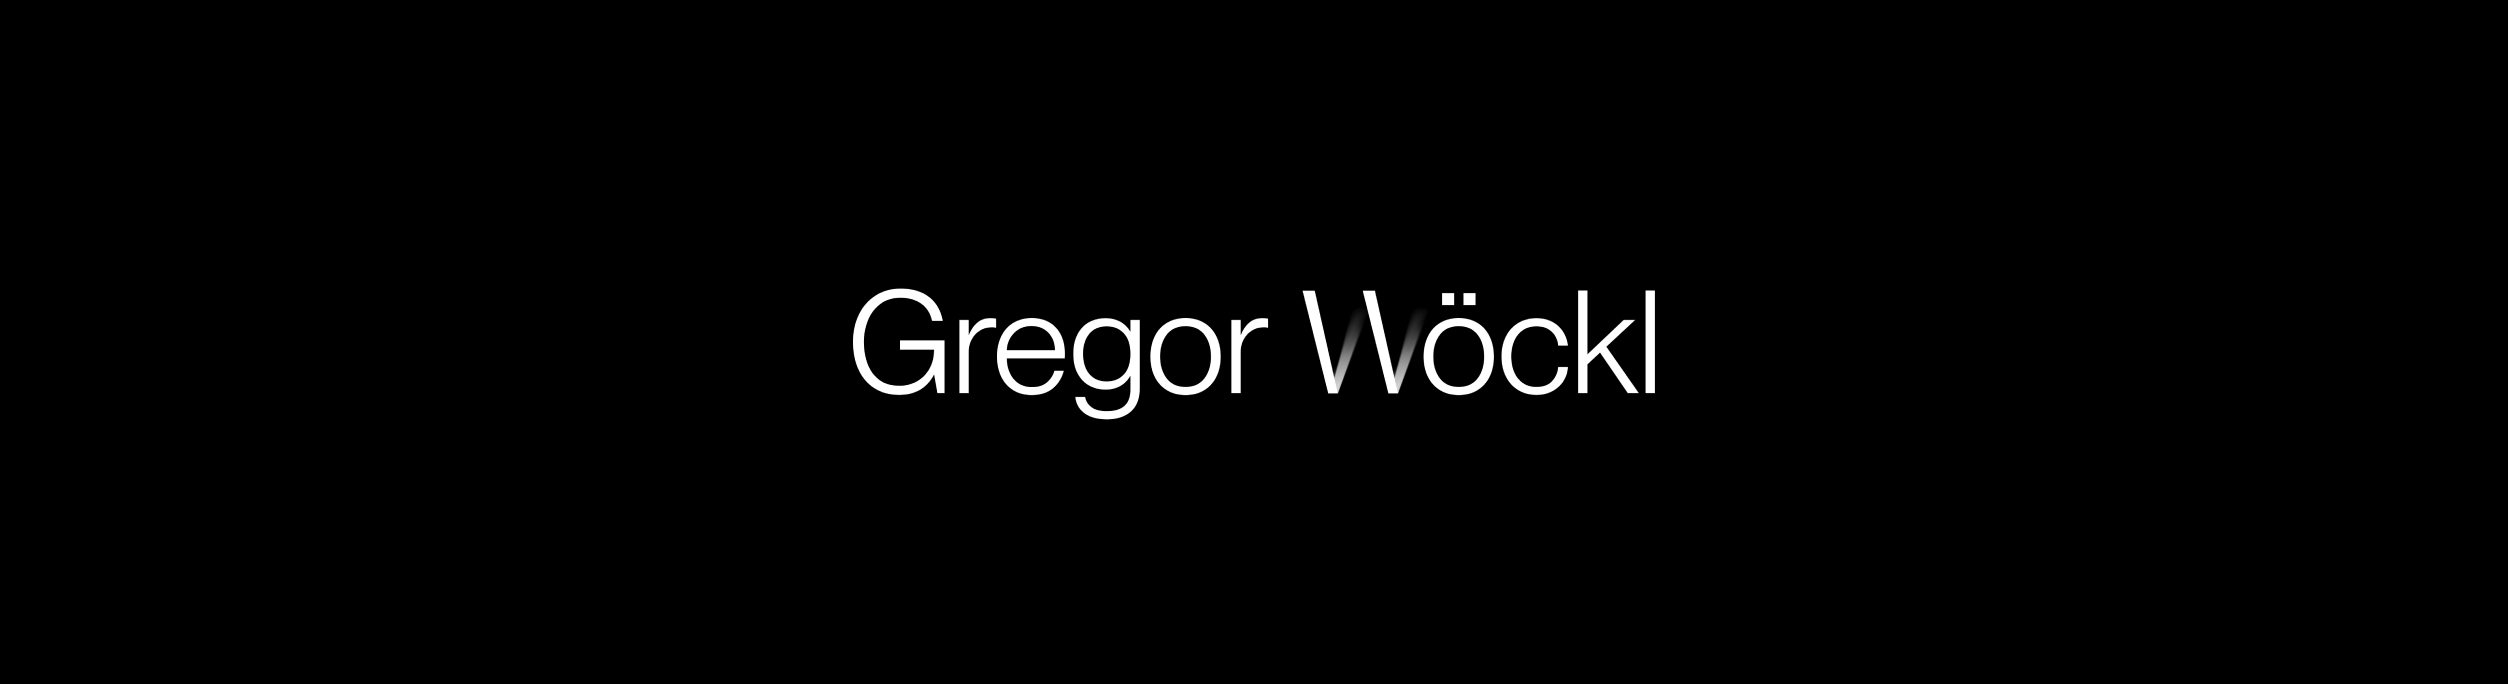 Gregor-Woeckl_Images_002